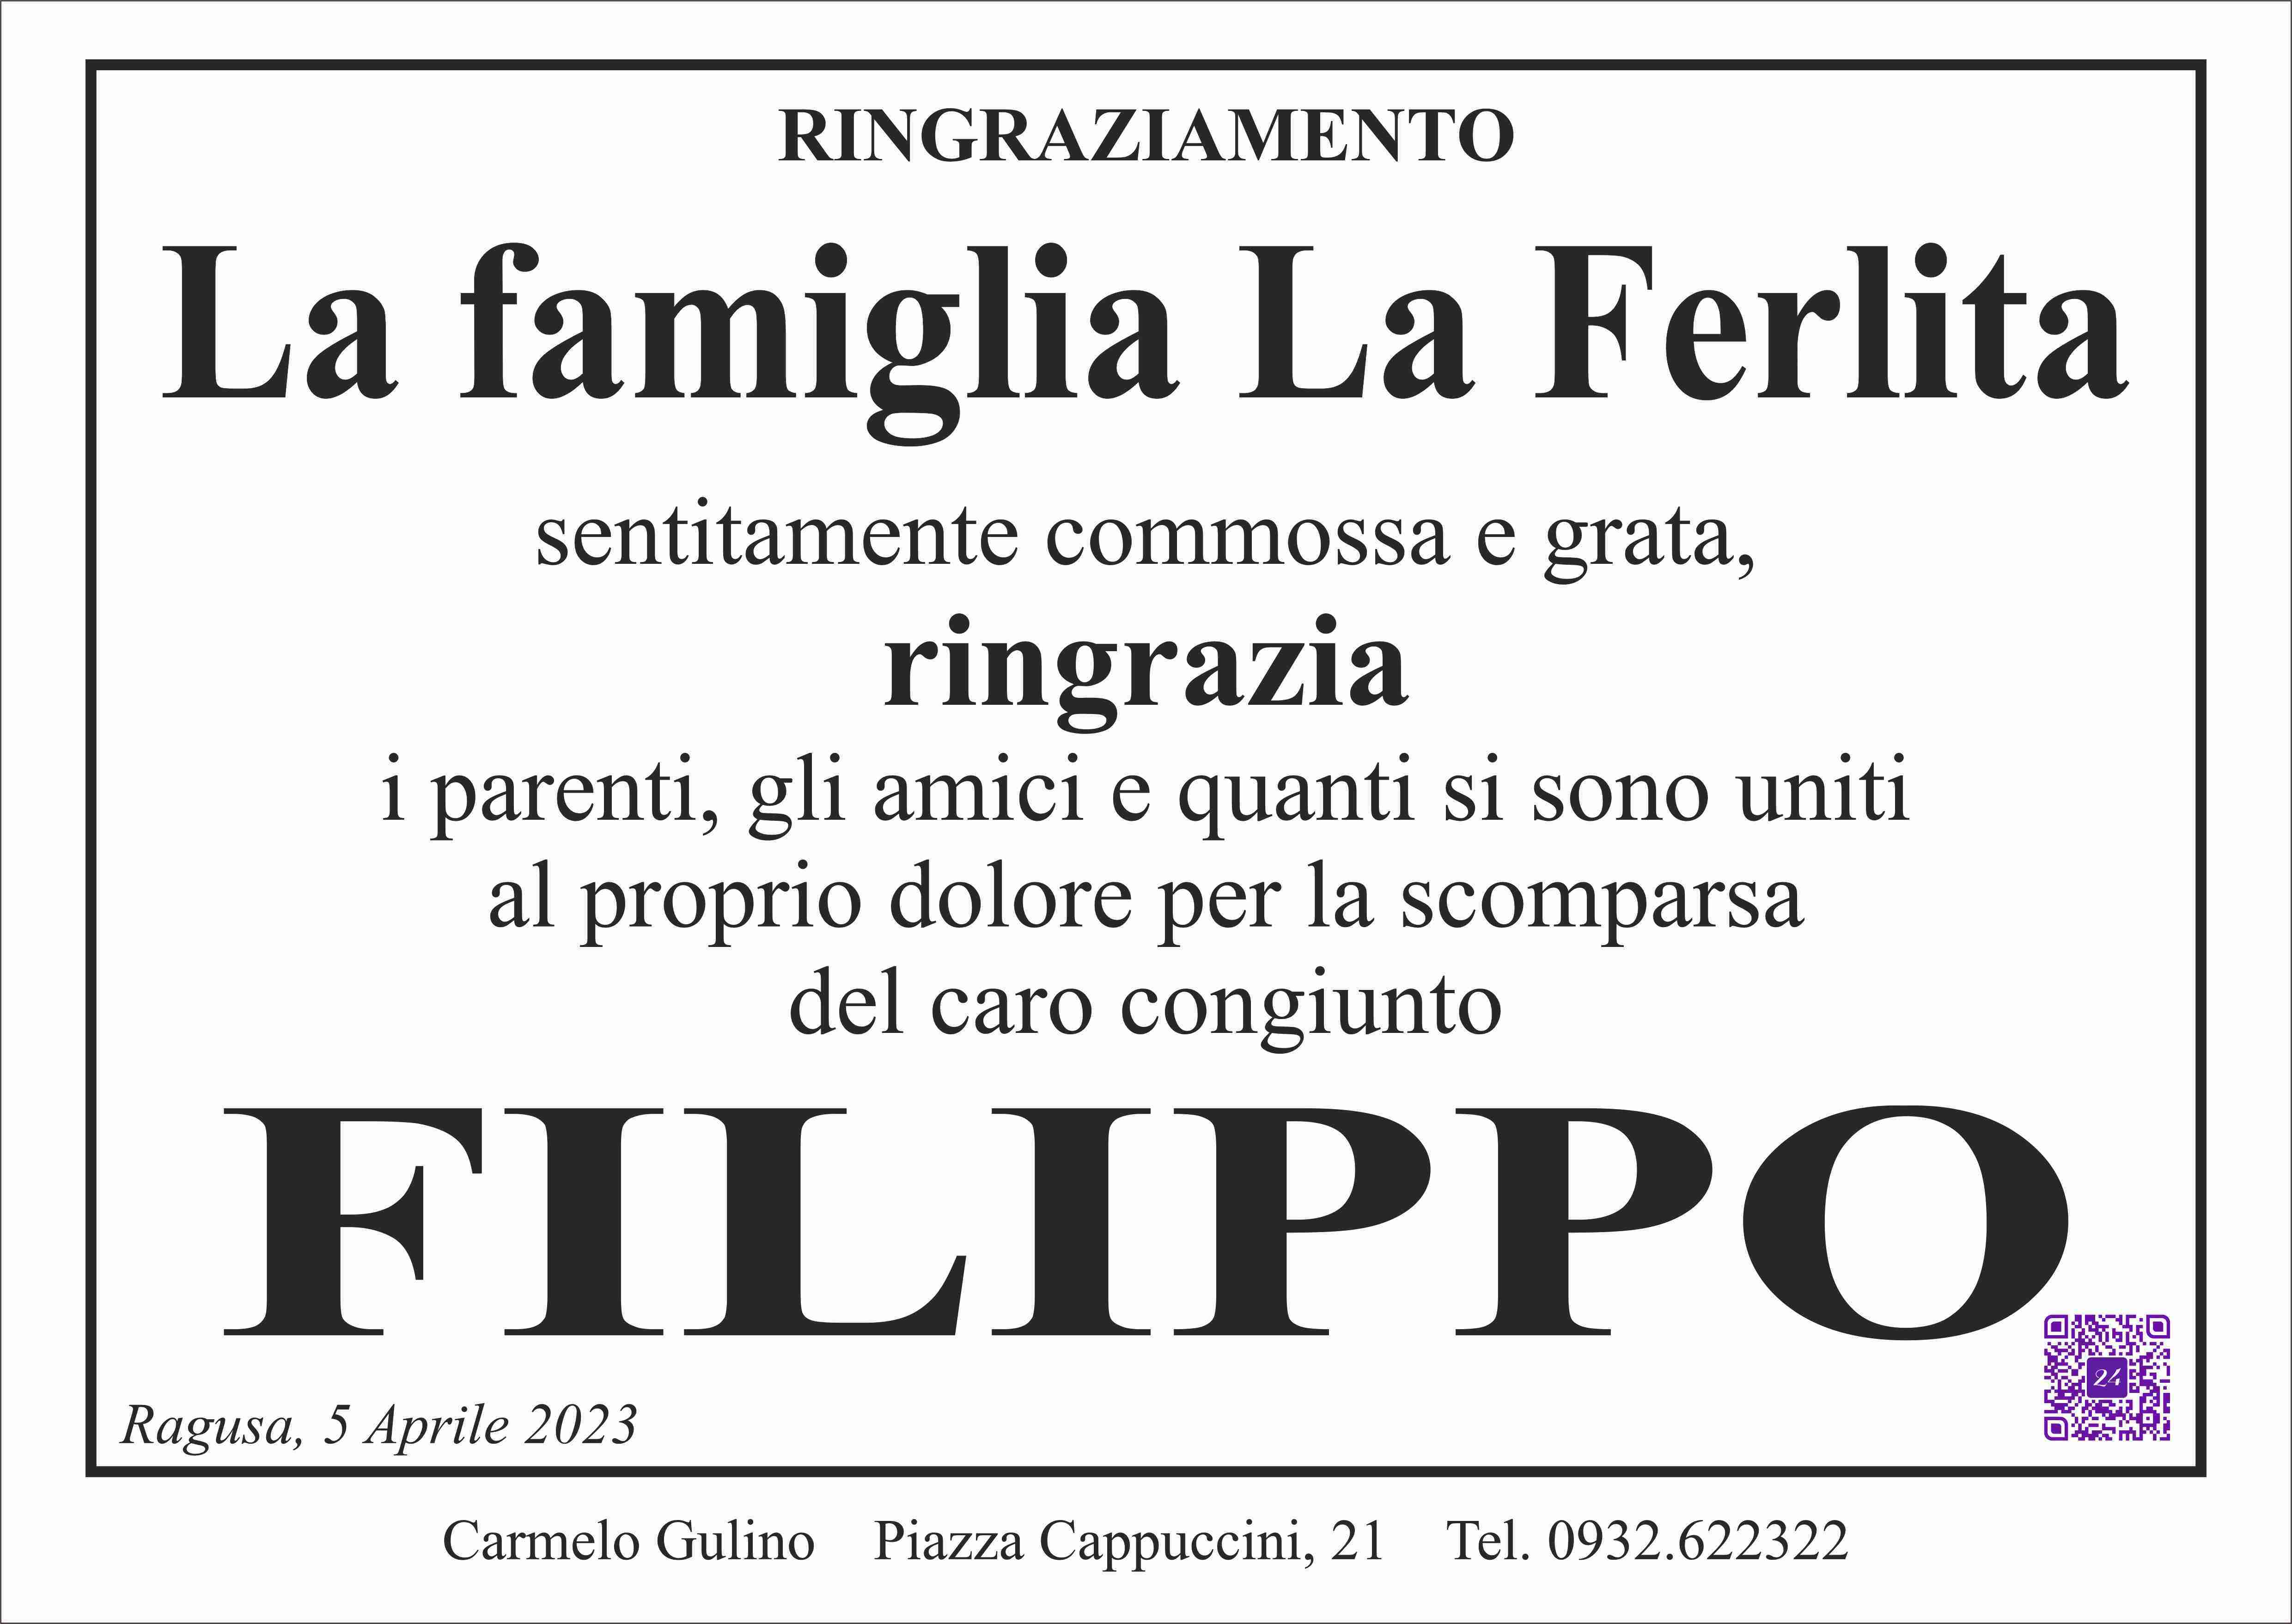 Filippo La Ferlita